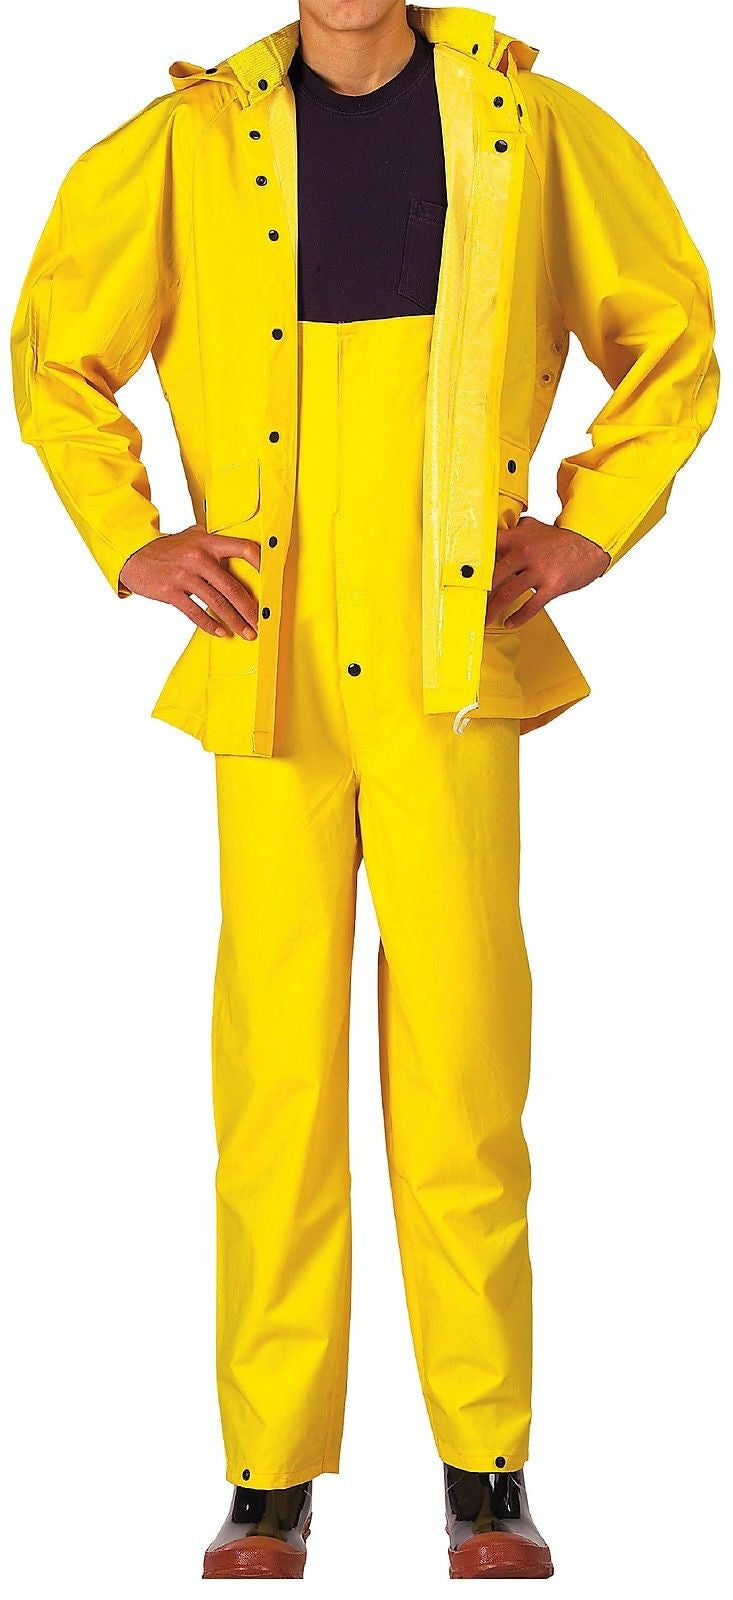 Adult's Deluxe Heavyweight PVC Rainsuit - Yellow Rain Top & Bottom Suit